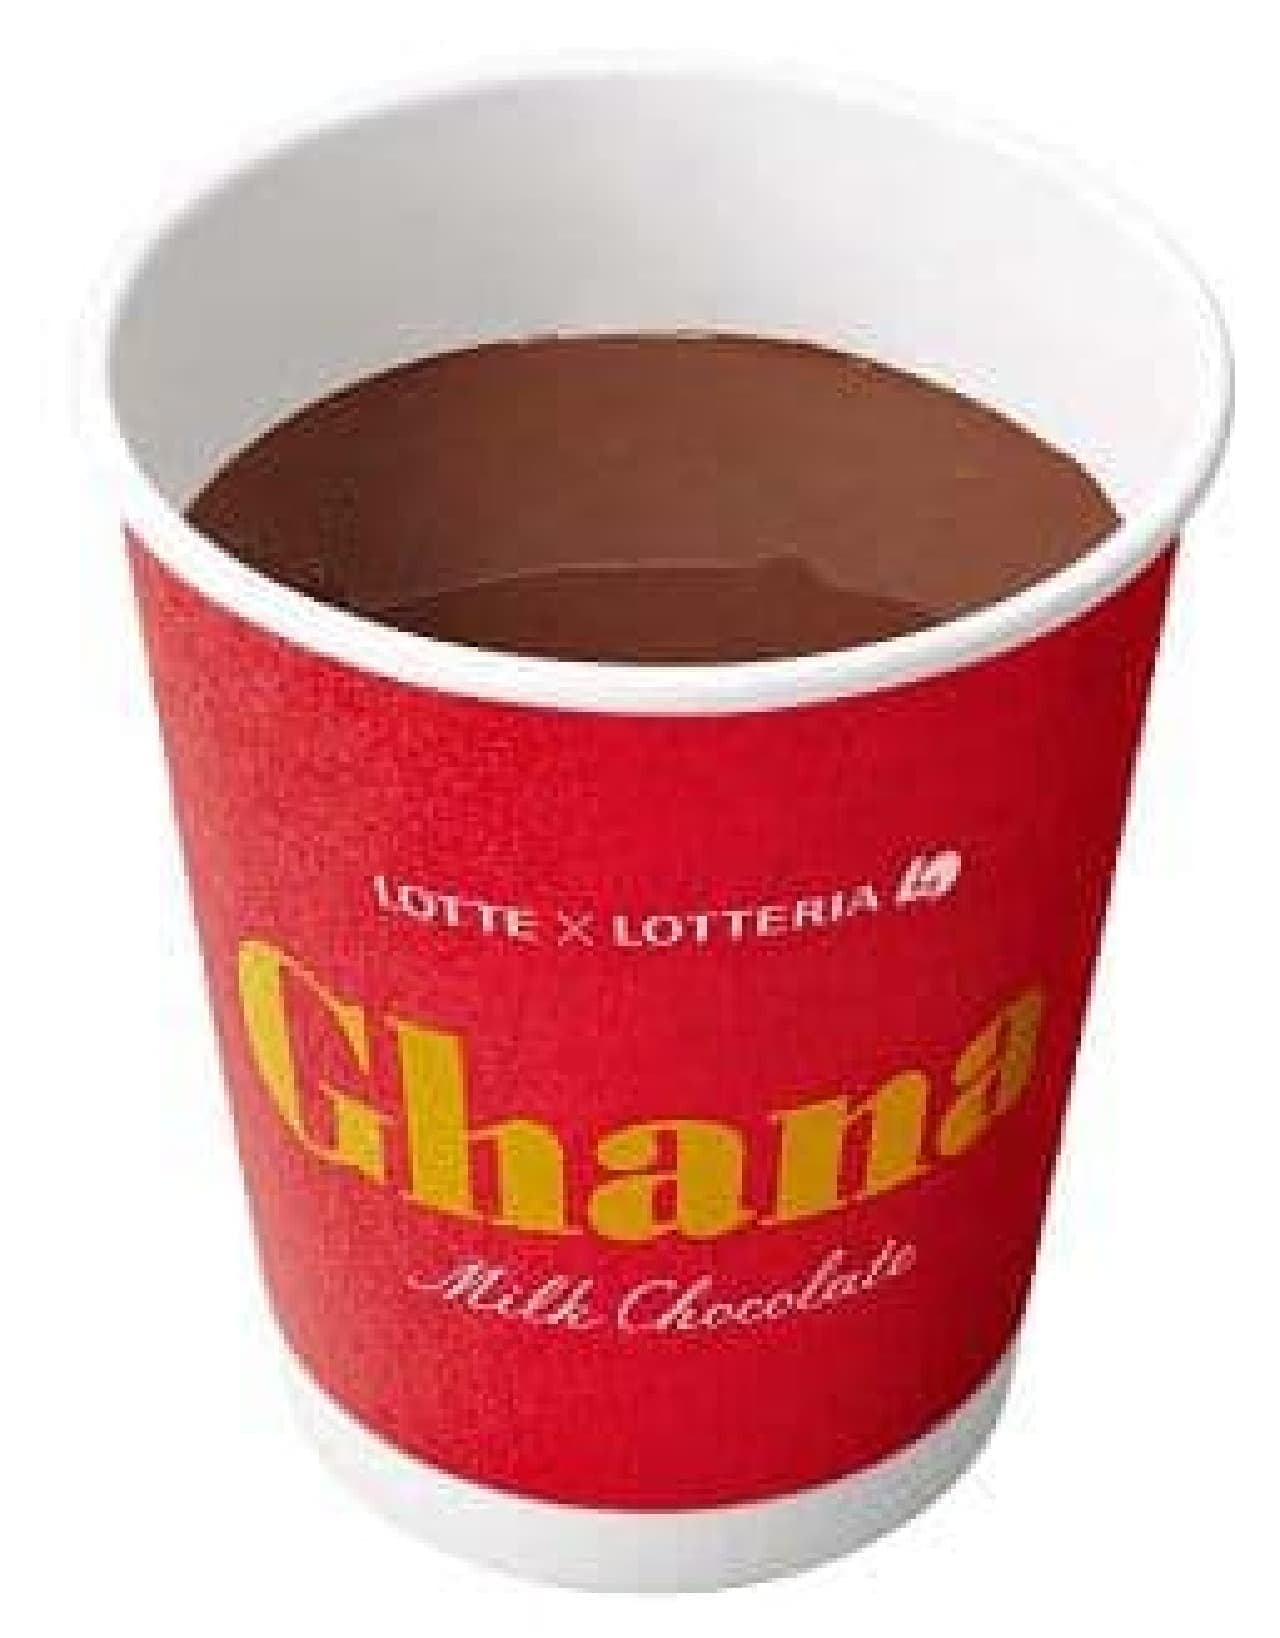 Lotteria Ghana Cafe "Hot Ghana Milk Chocolate Mocha Blend"